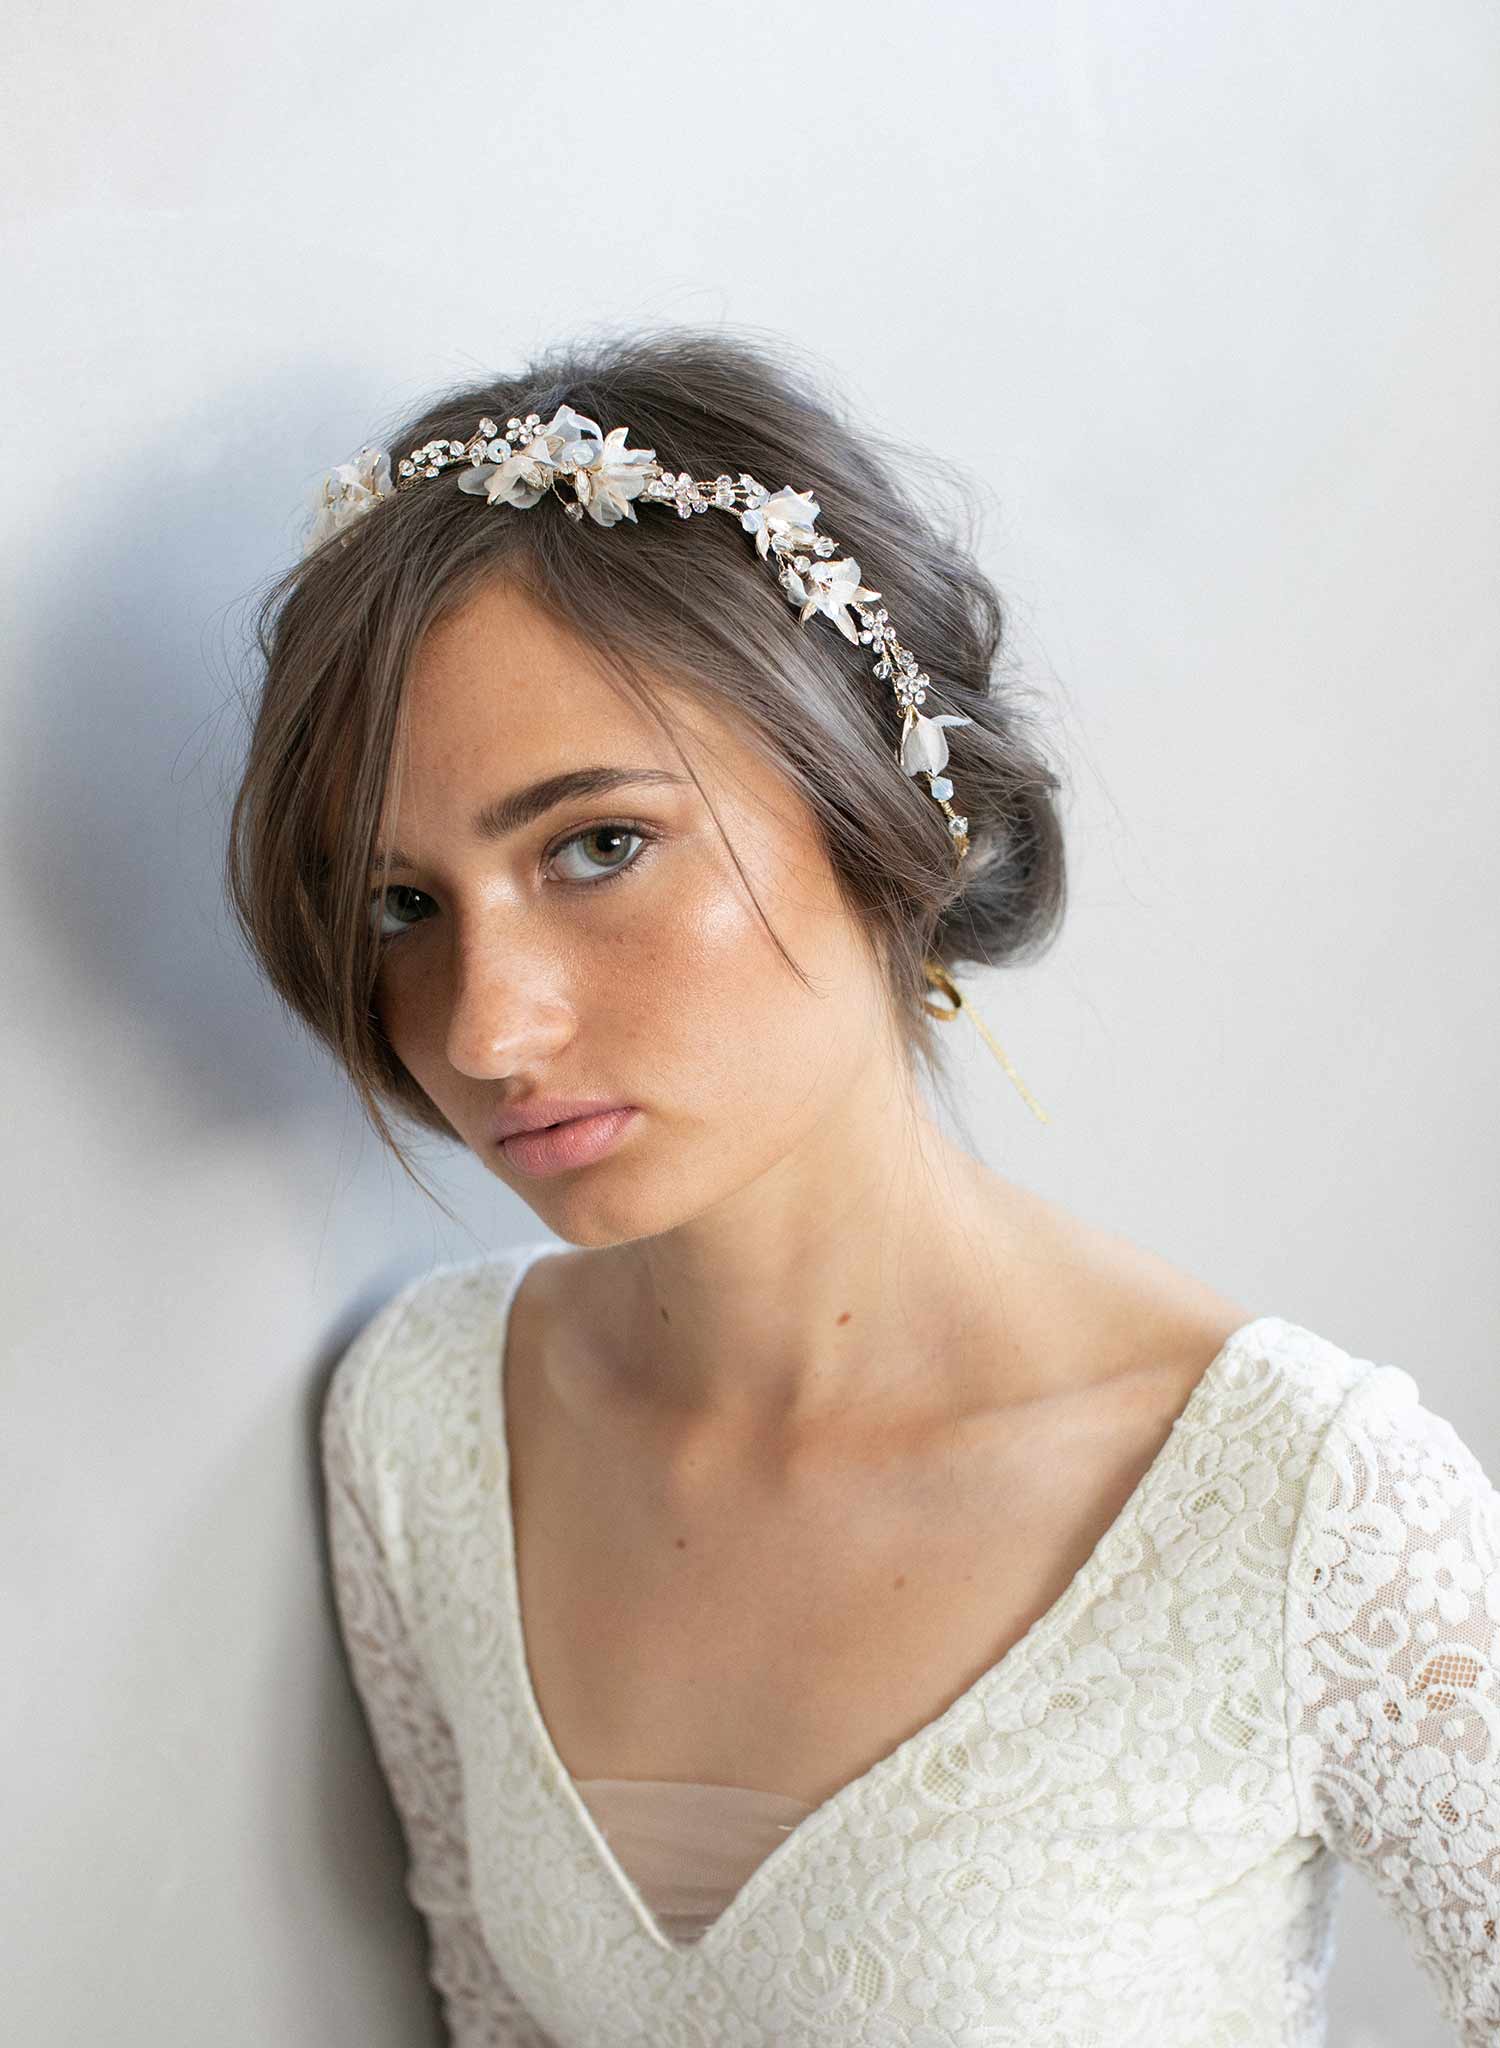 Twigs & Honey Sparkly Bridal Headband - Regal Crystal Bridal Headband - Style #2174